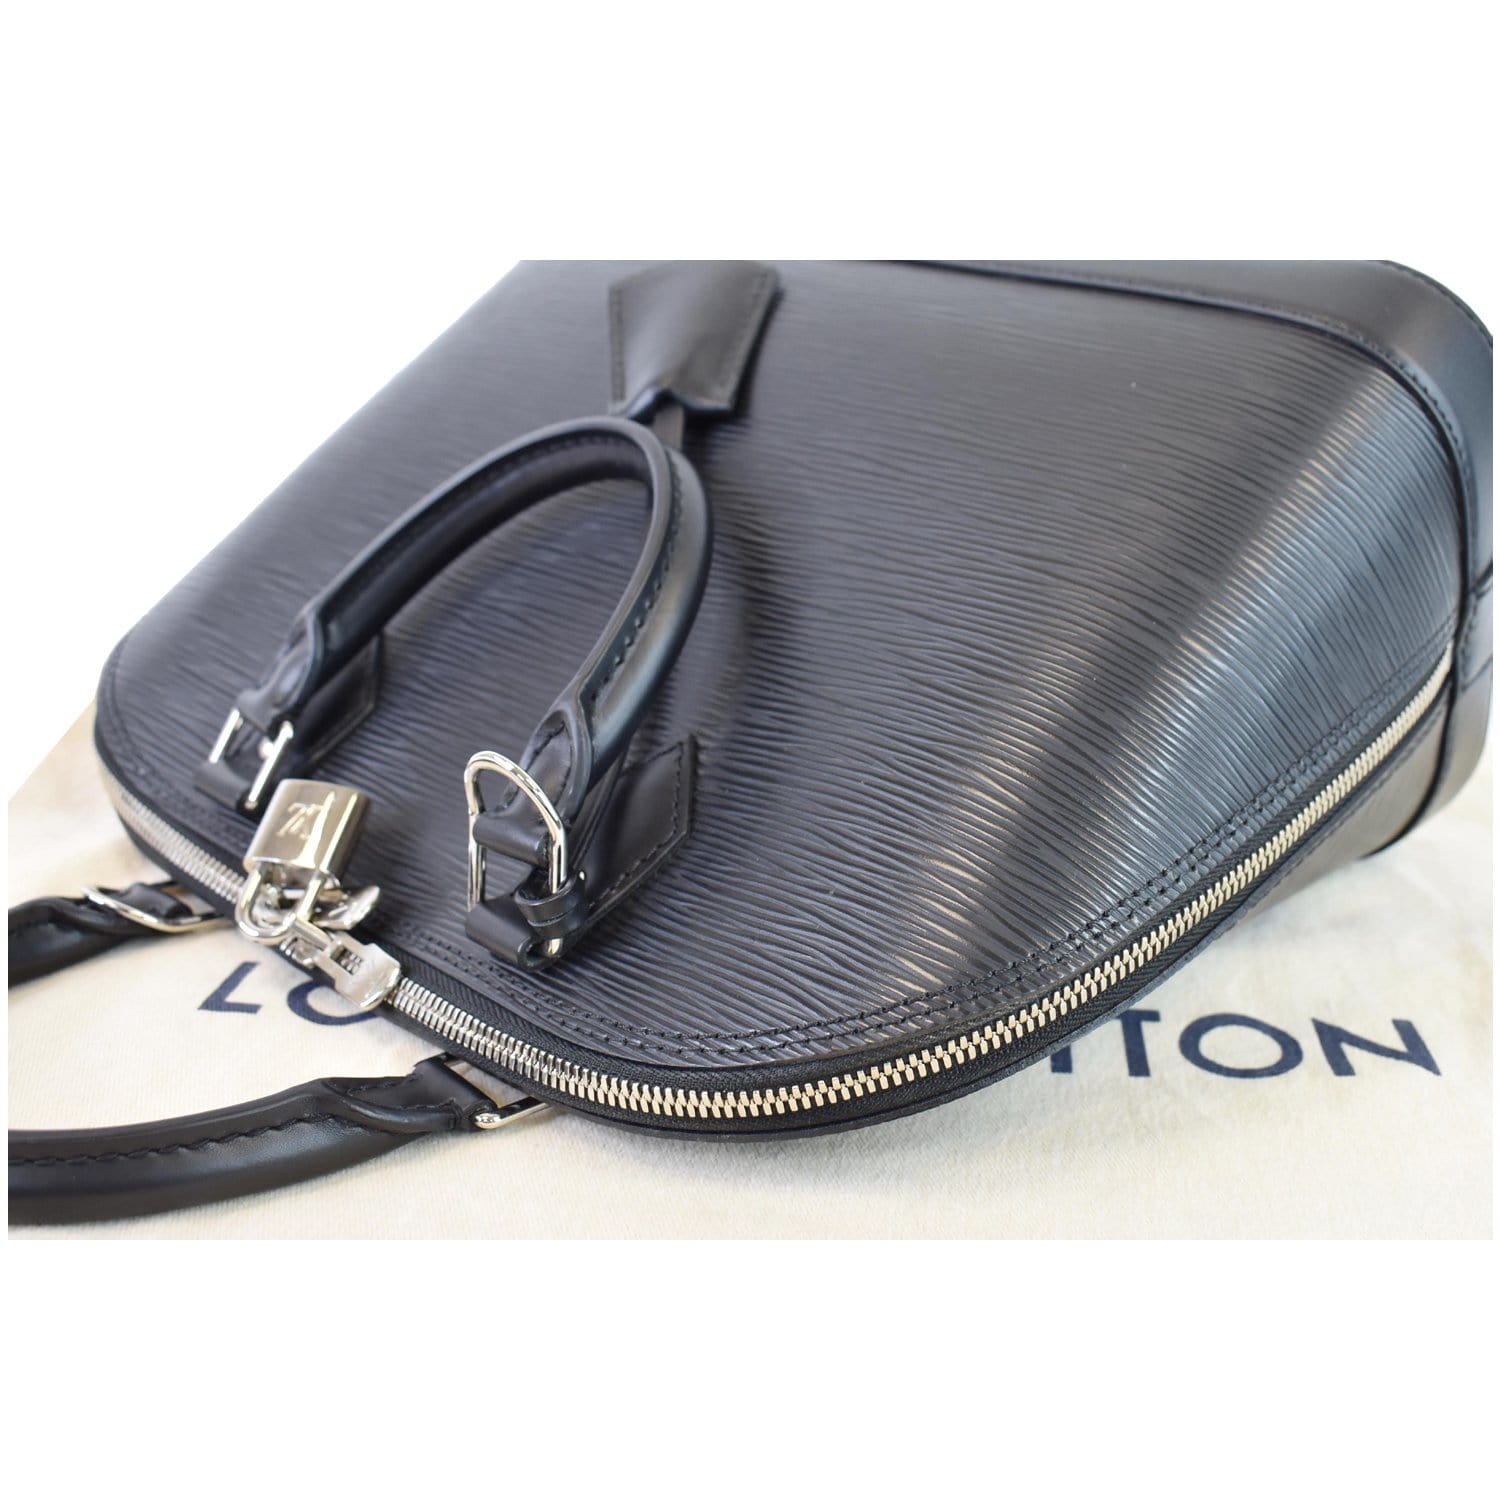 pm epi leather handbags